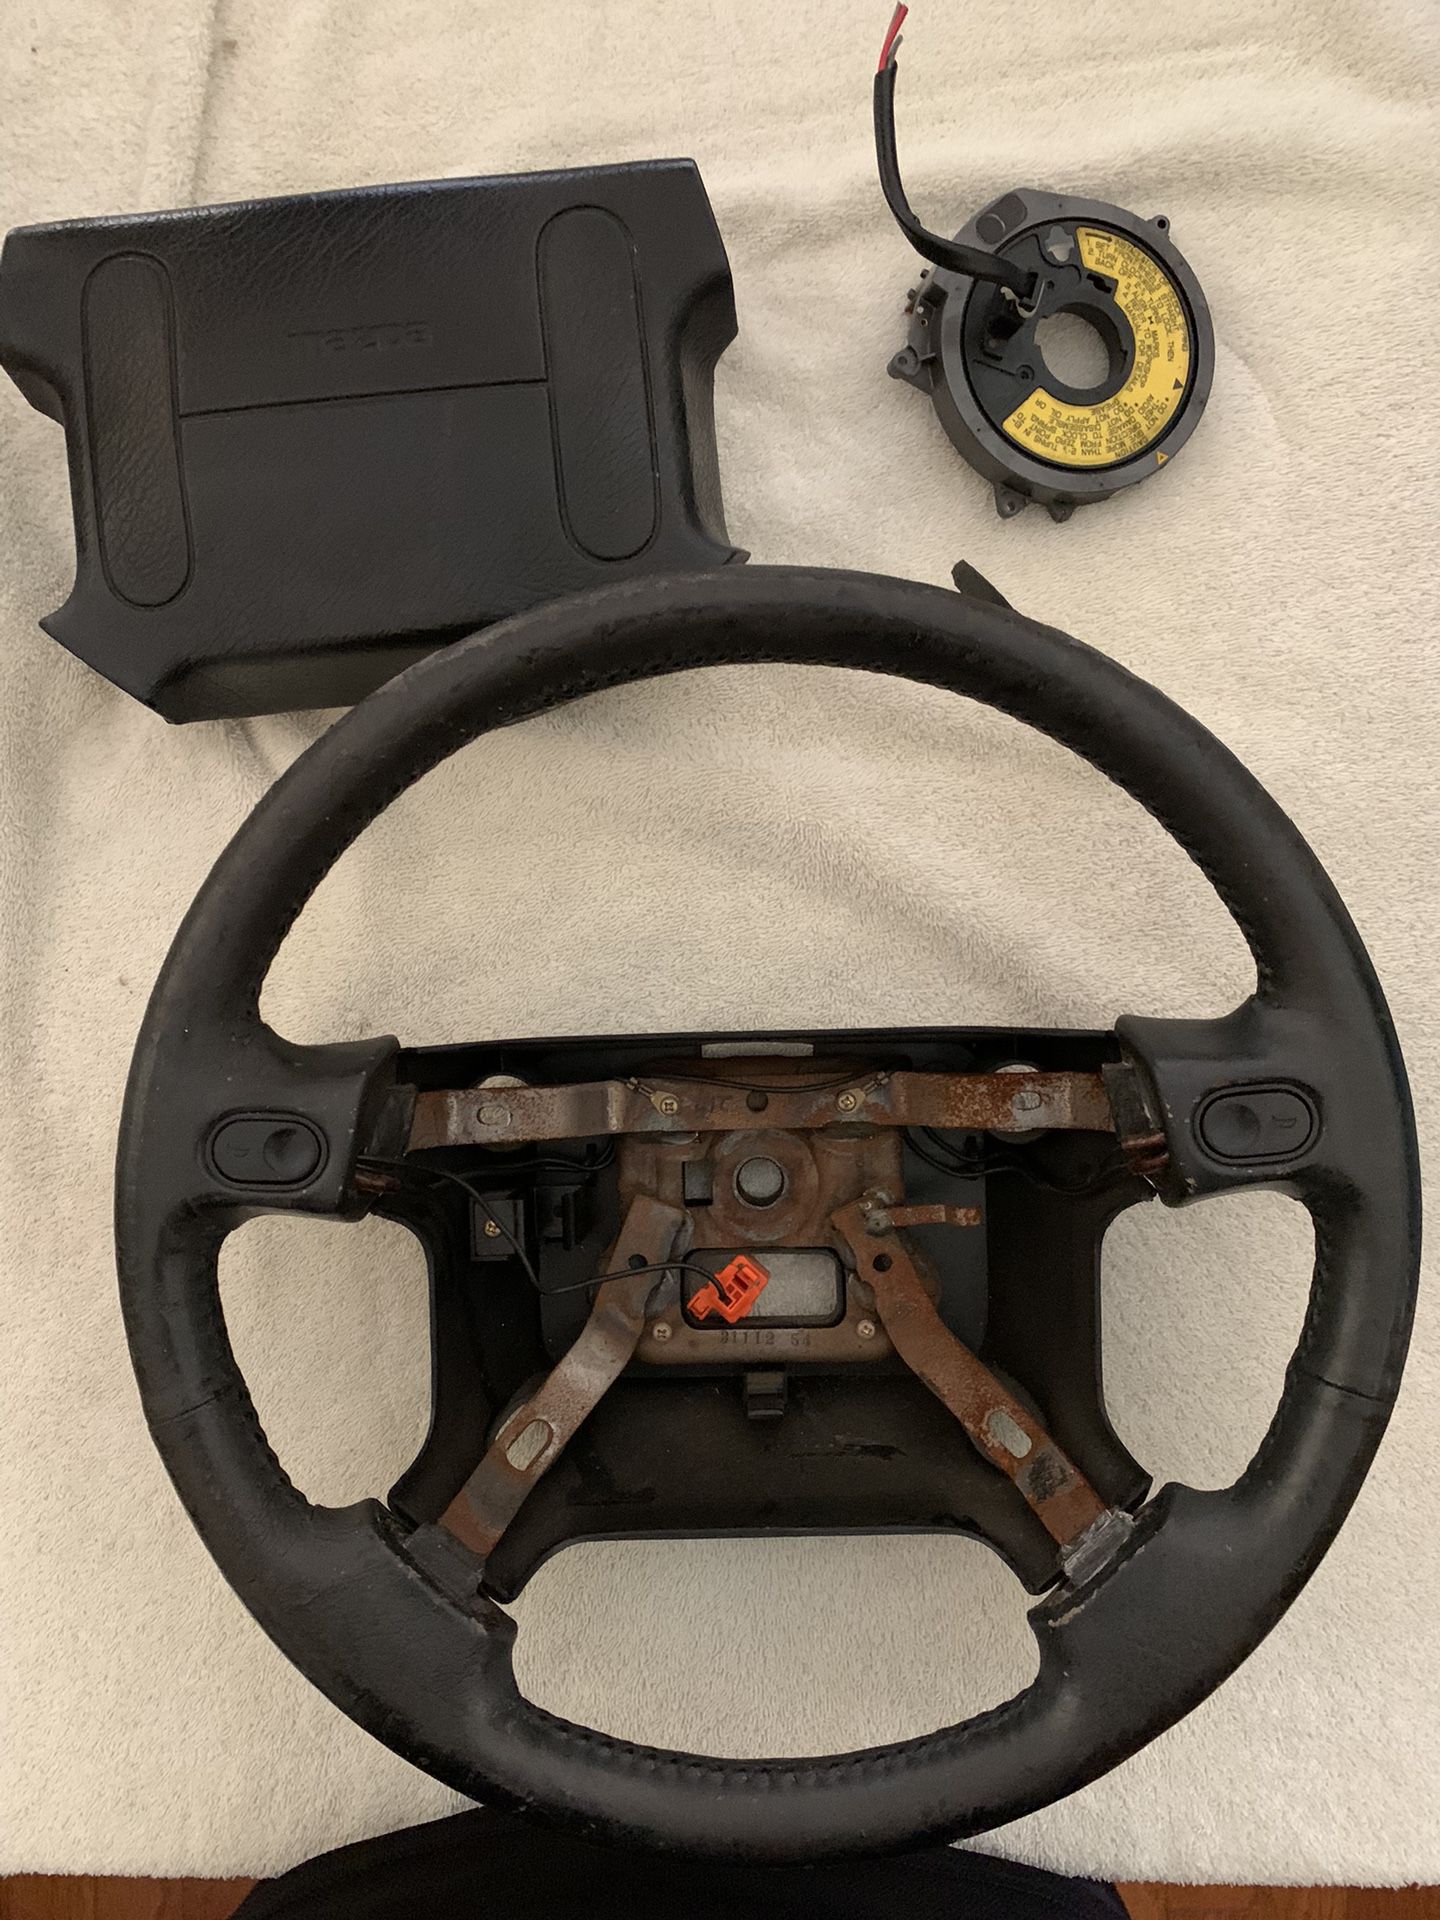 NA Mazda Miata Steering Wheel